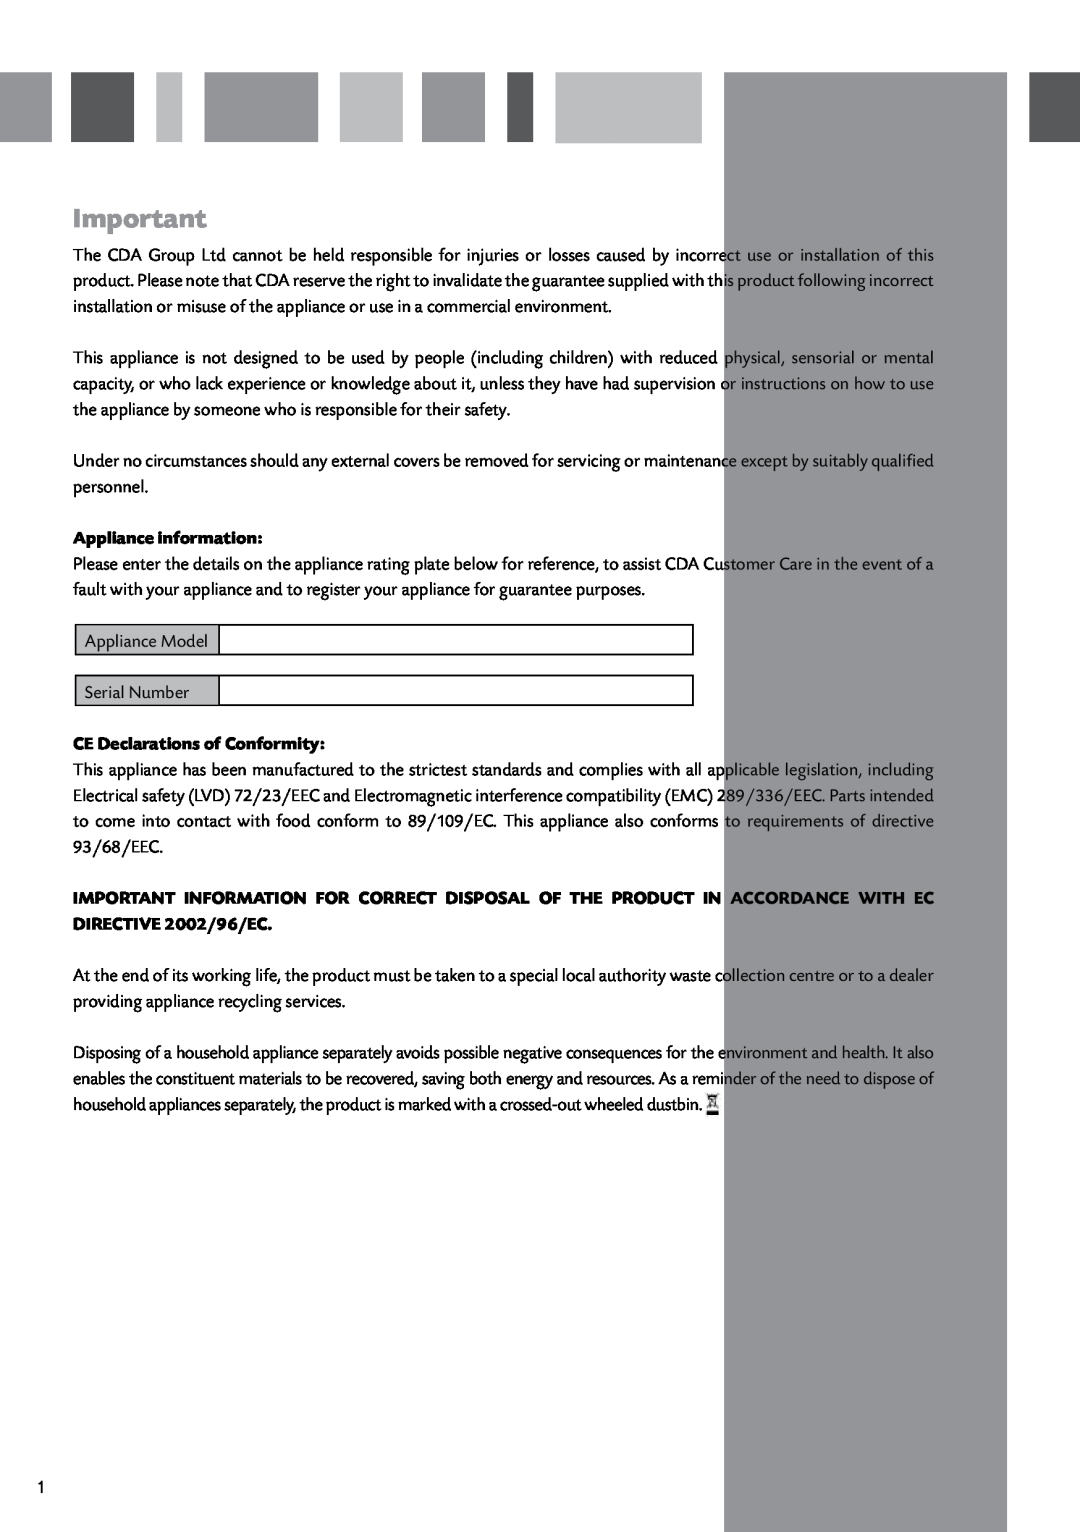 CDA HVC90, HVC70, HVC60 manual Appliance information, CE Declarations of Conformity 